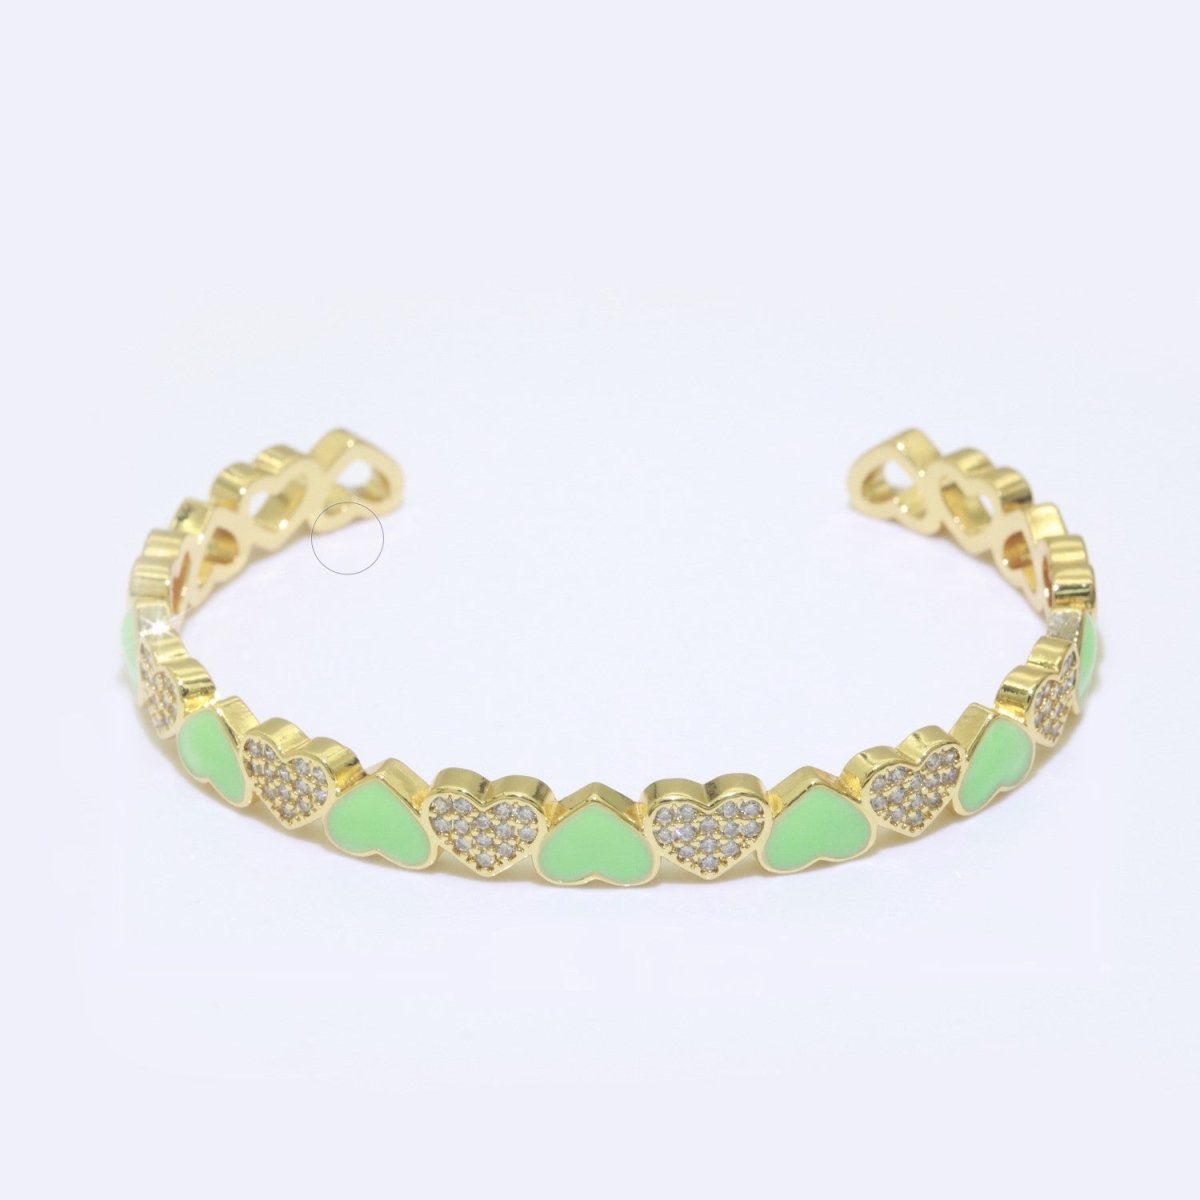 Green Heart Enamel 14k Gold Filled Adjustable Bangle, Gold Cuff Bangle Bracelet Micro Pave Jewelry - DLUXCA